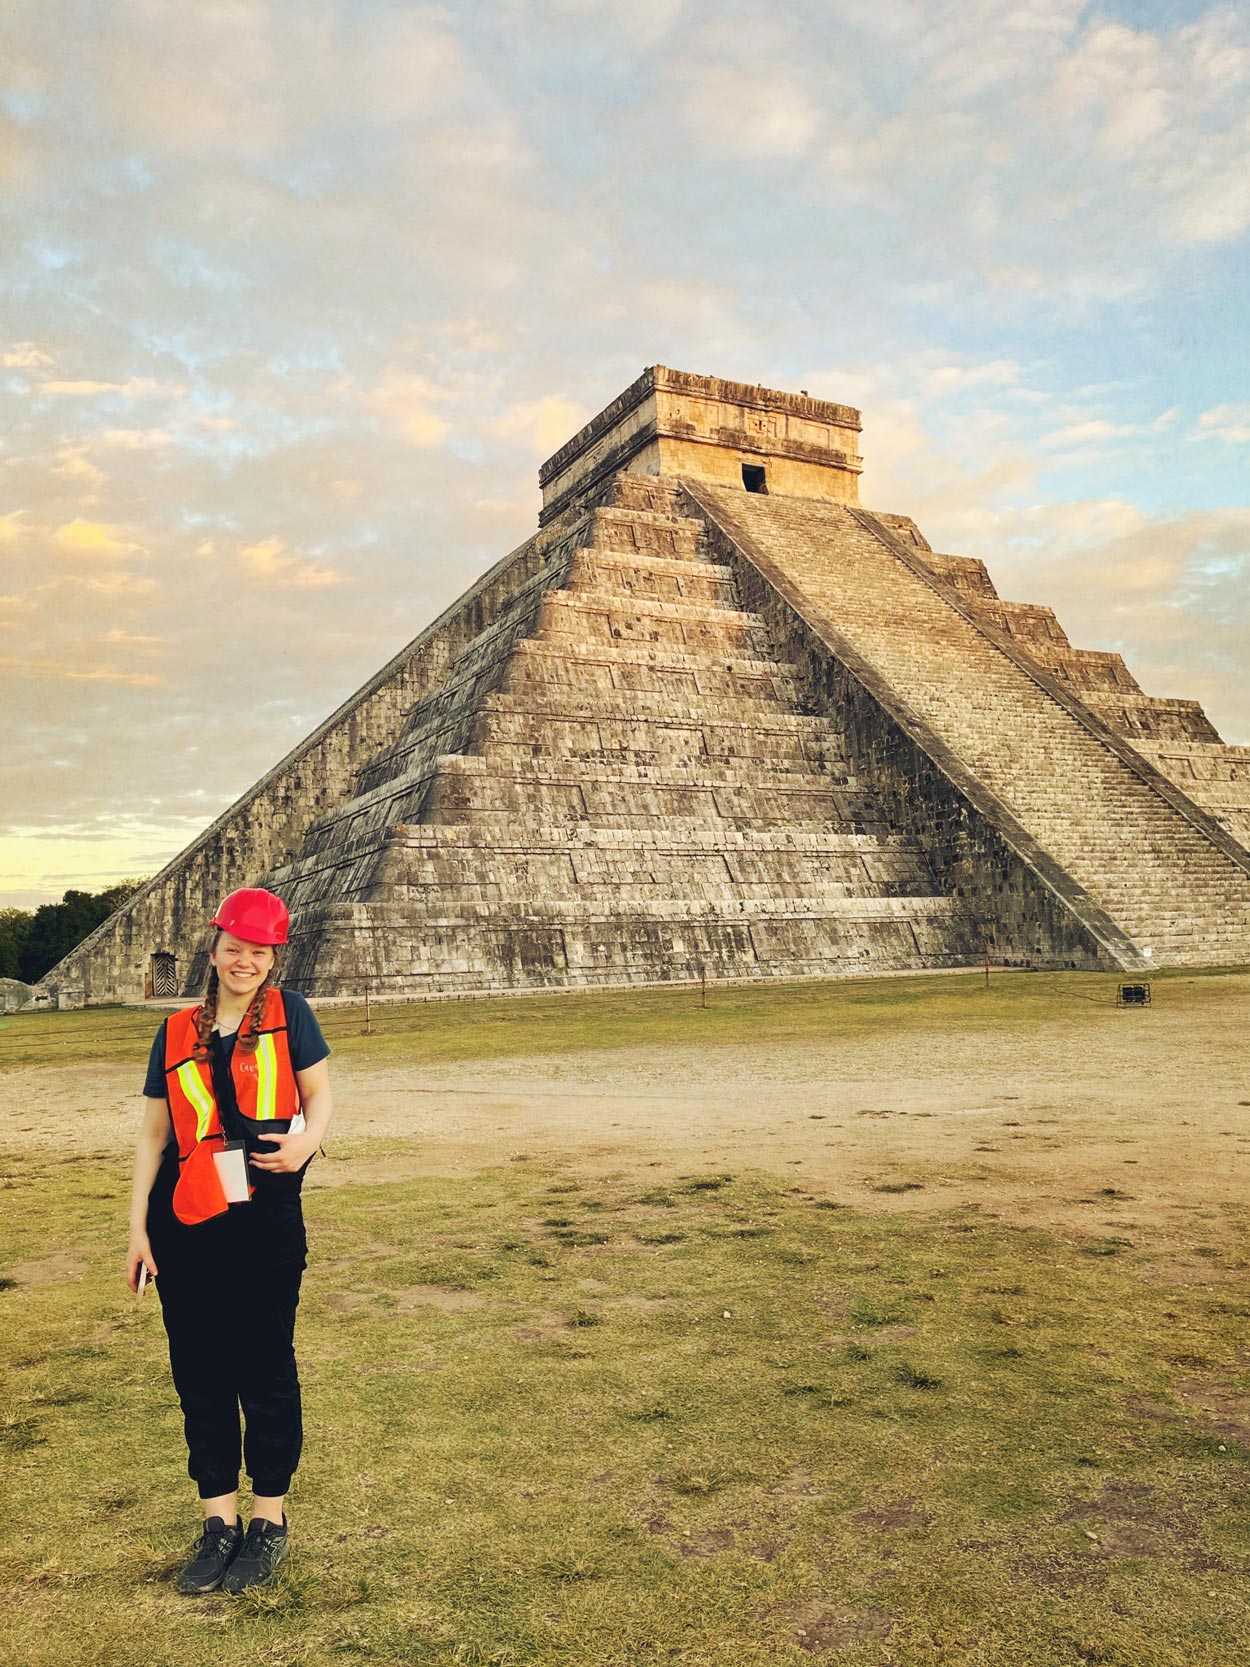 Sydney Roberts in a hard hat and orange vest poses for photo in front of El Castillo